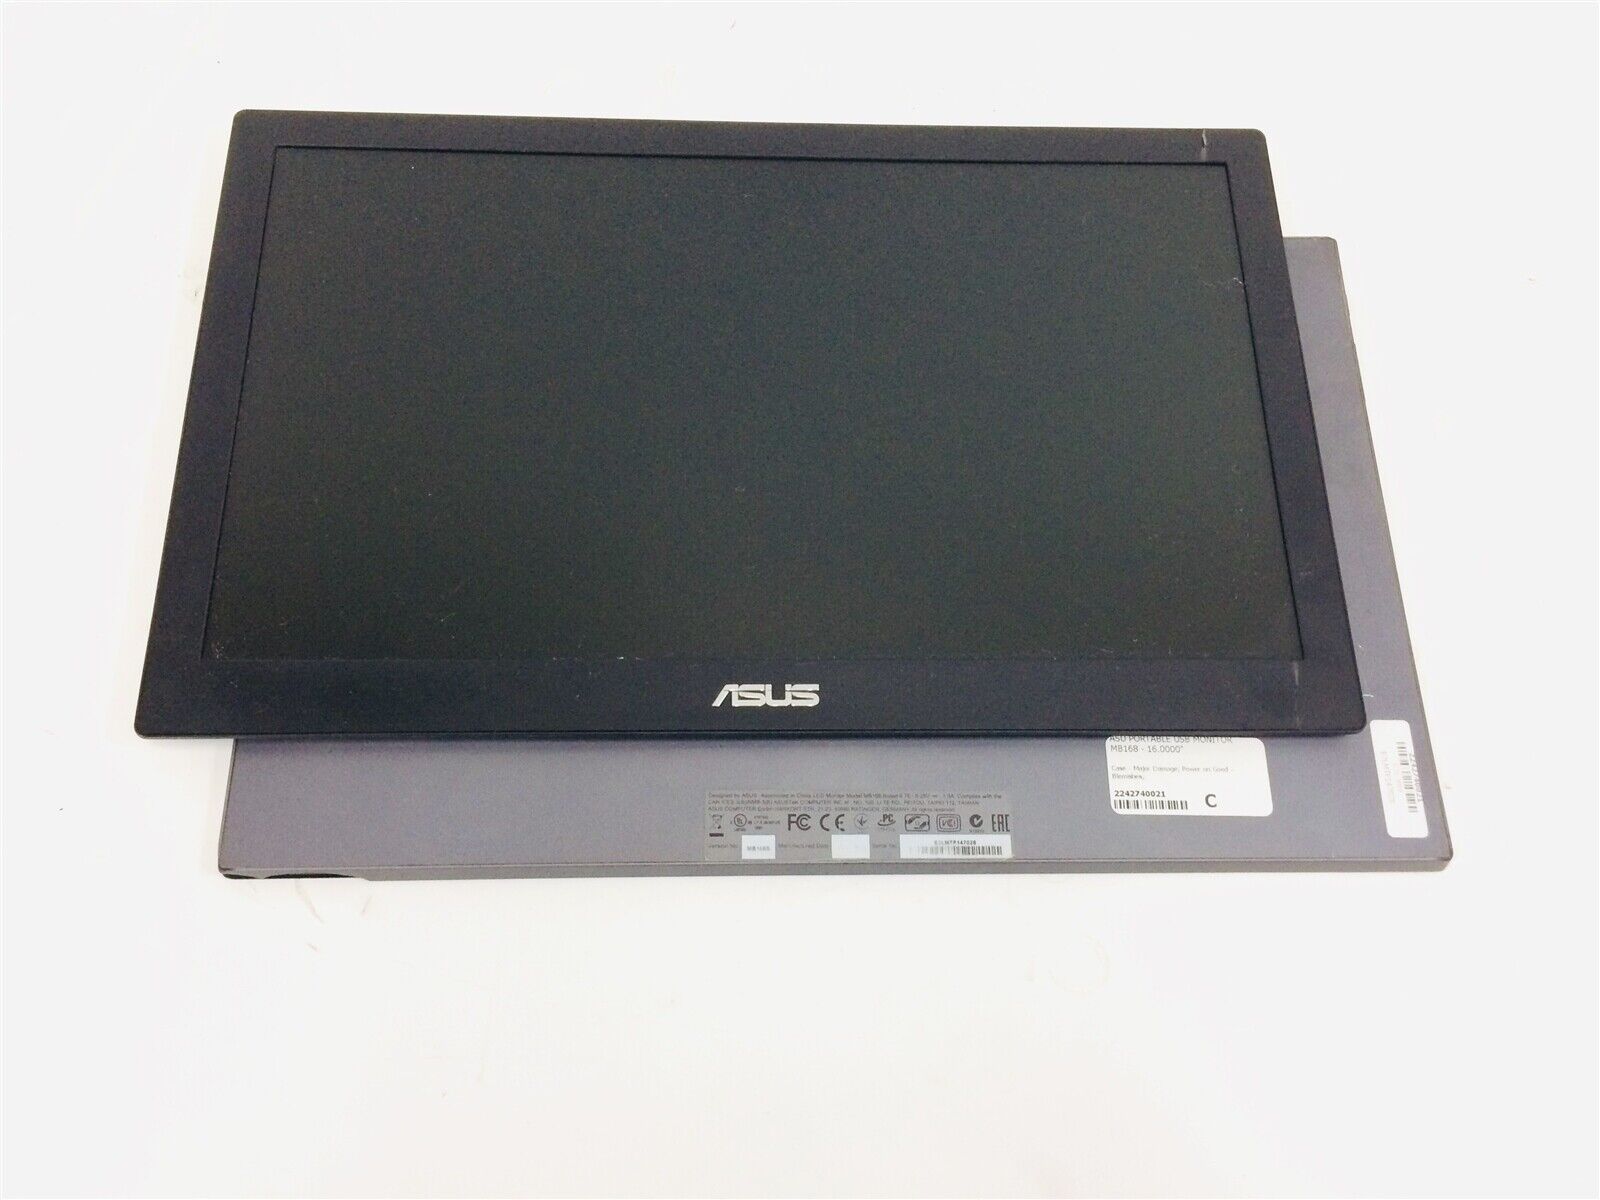 Lot of 2 Asus MB169B 15.6" Portable USB Monitor - See Description ASUS